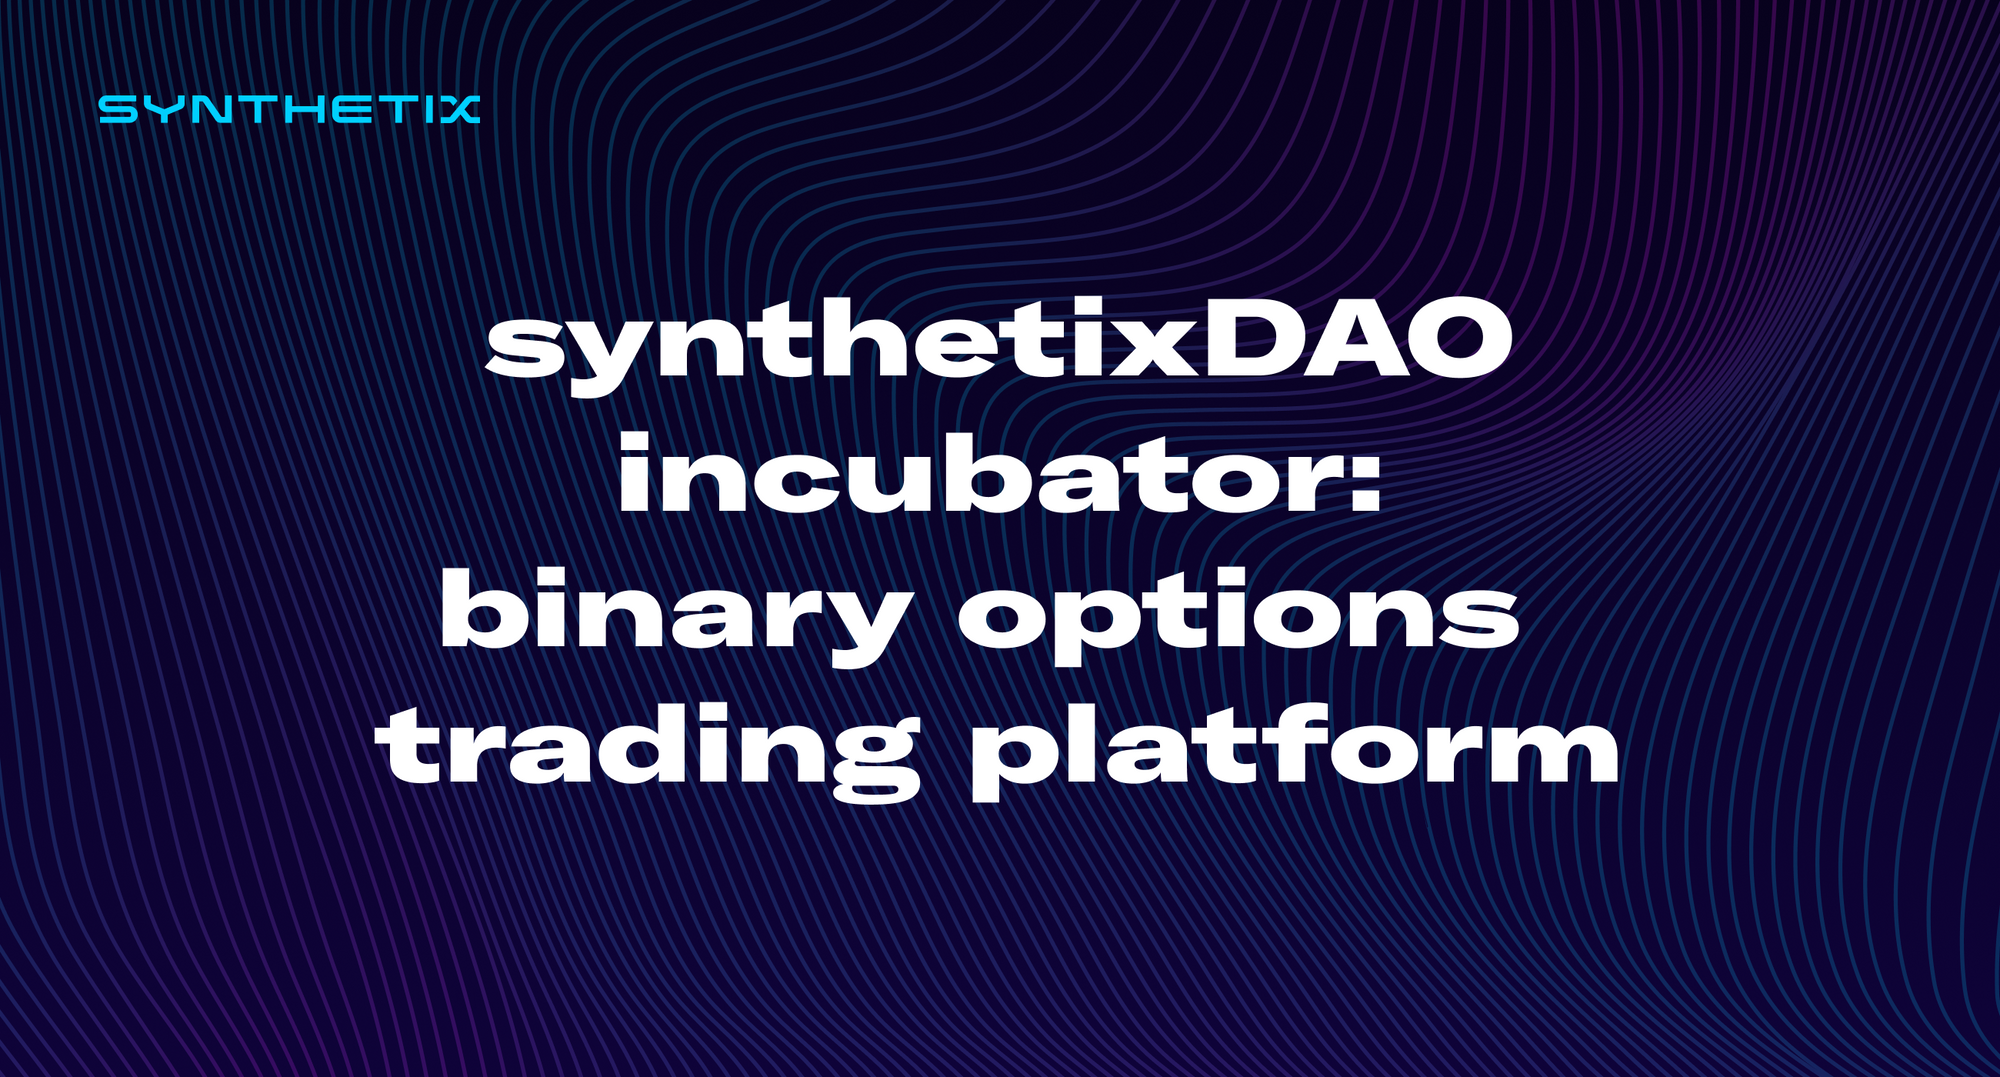 synthetixDAO incubator: binary options trading platform